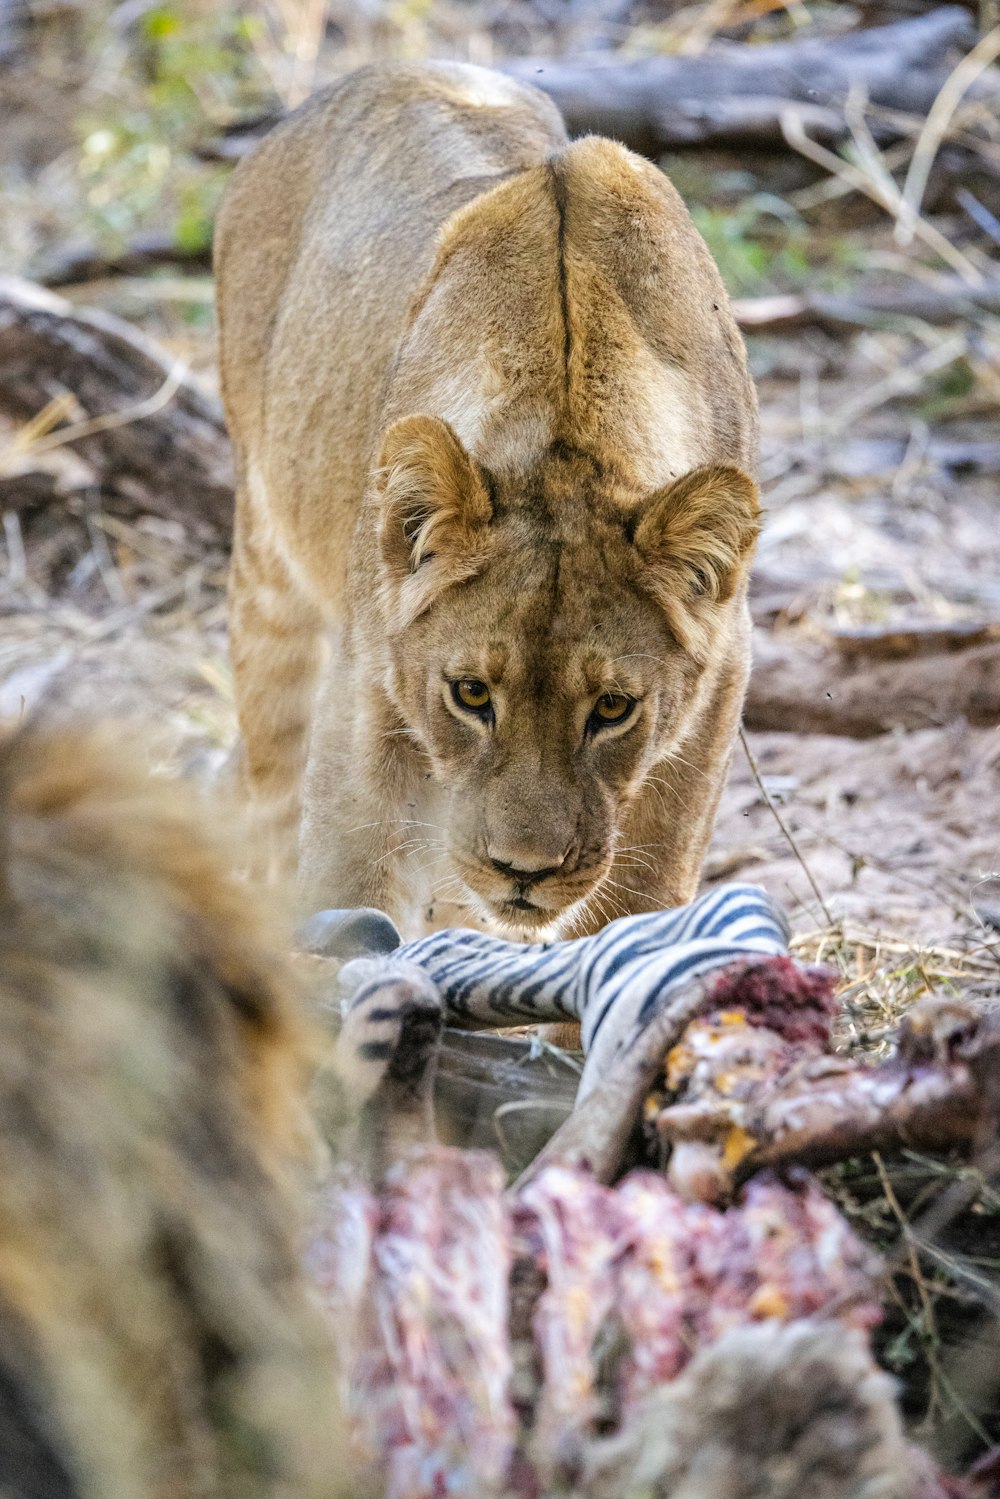 a lion cub eating a fish